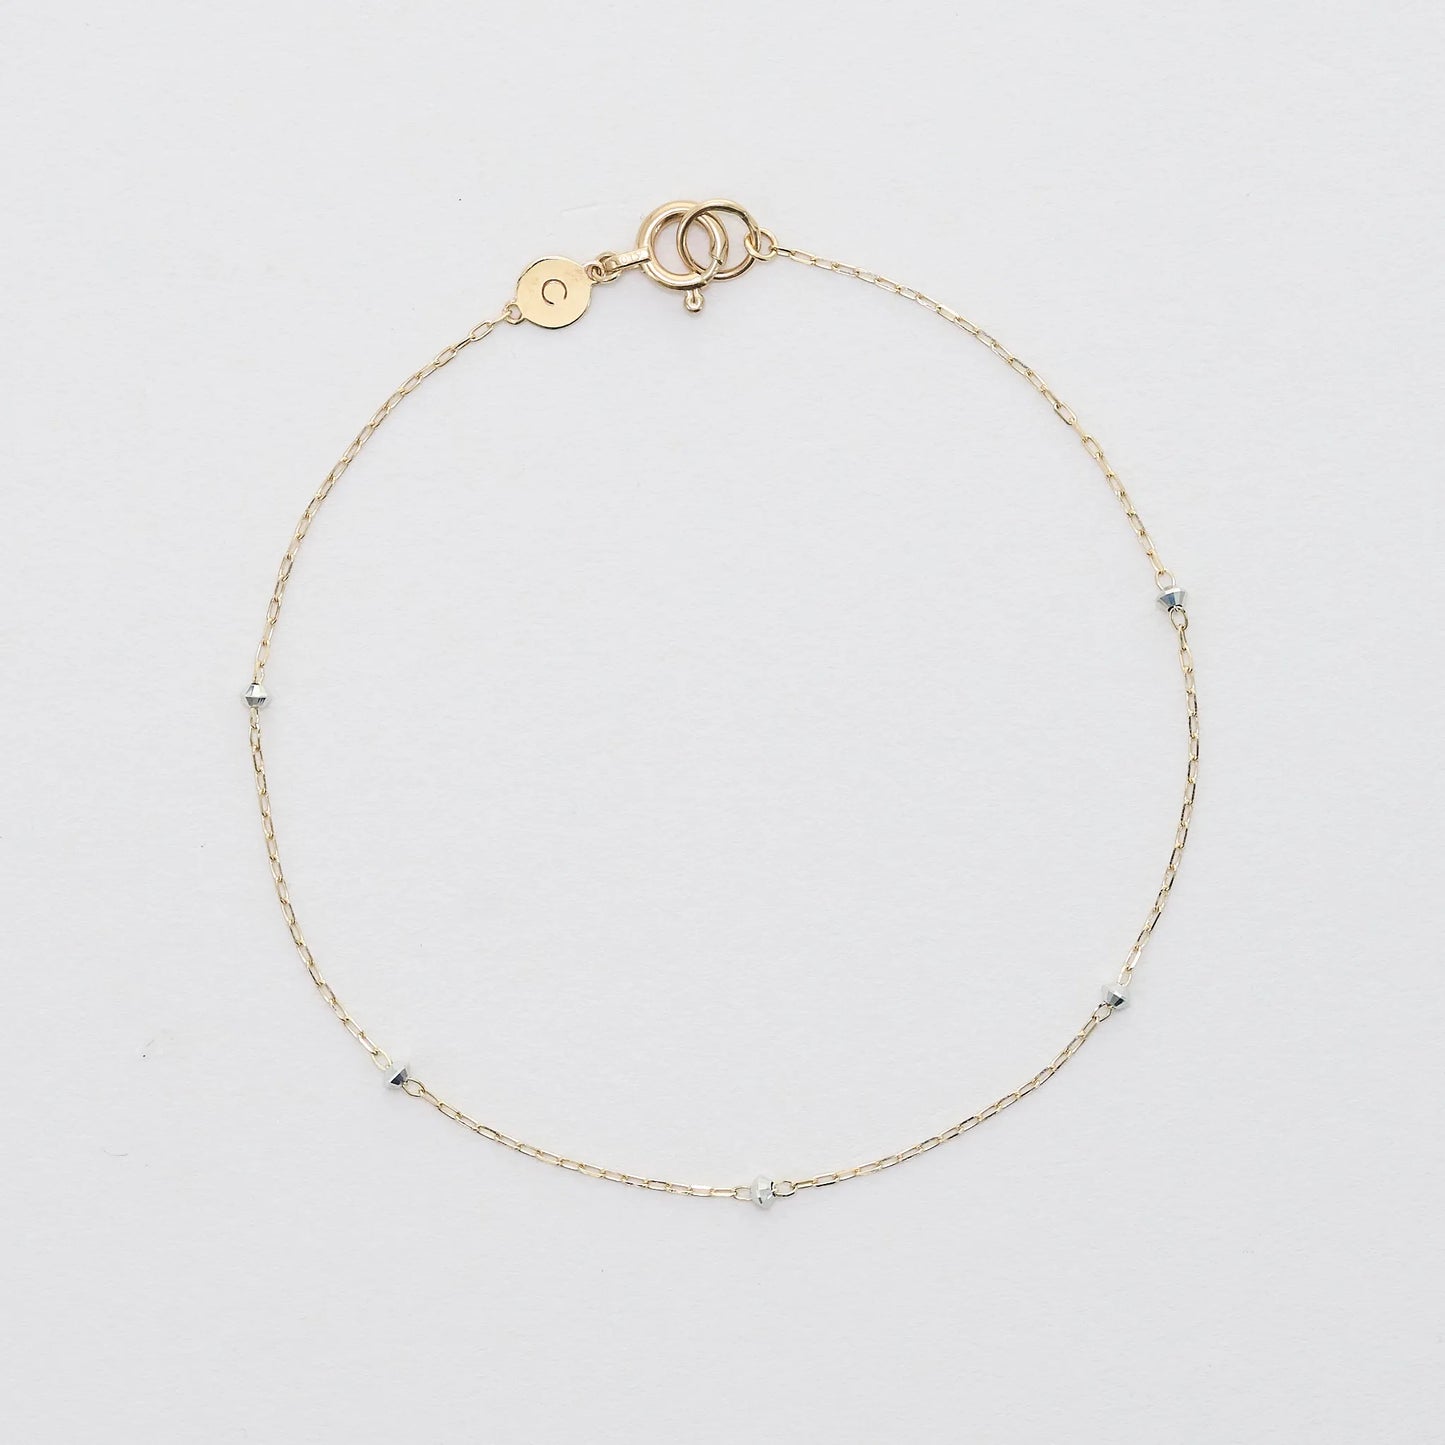 Gold Chain Bracelet_silver colored parts